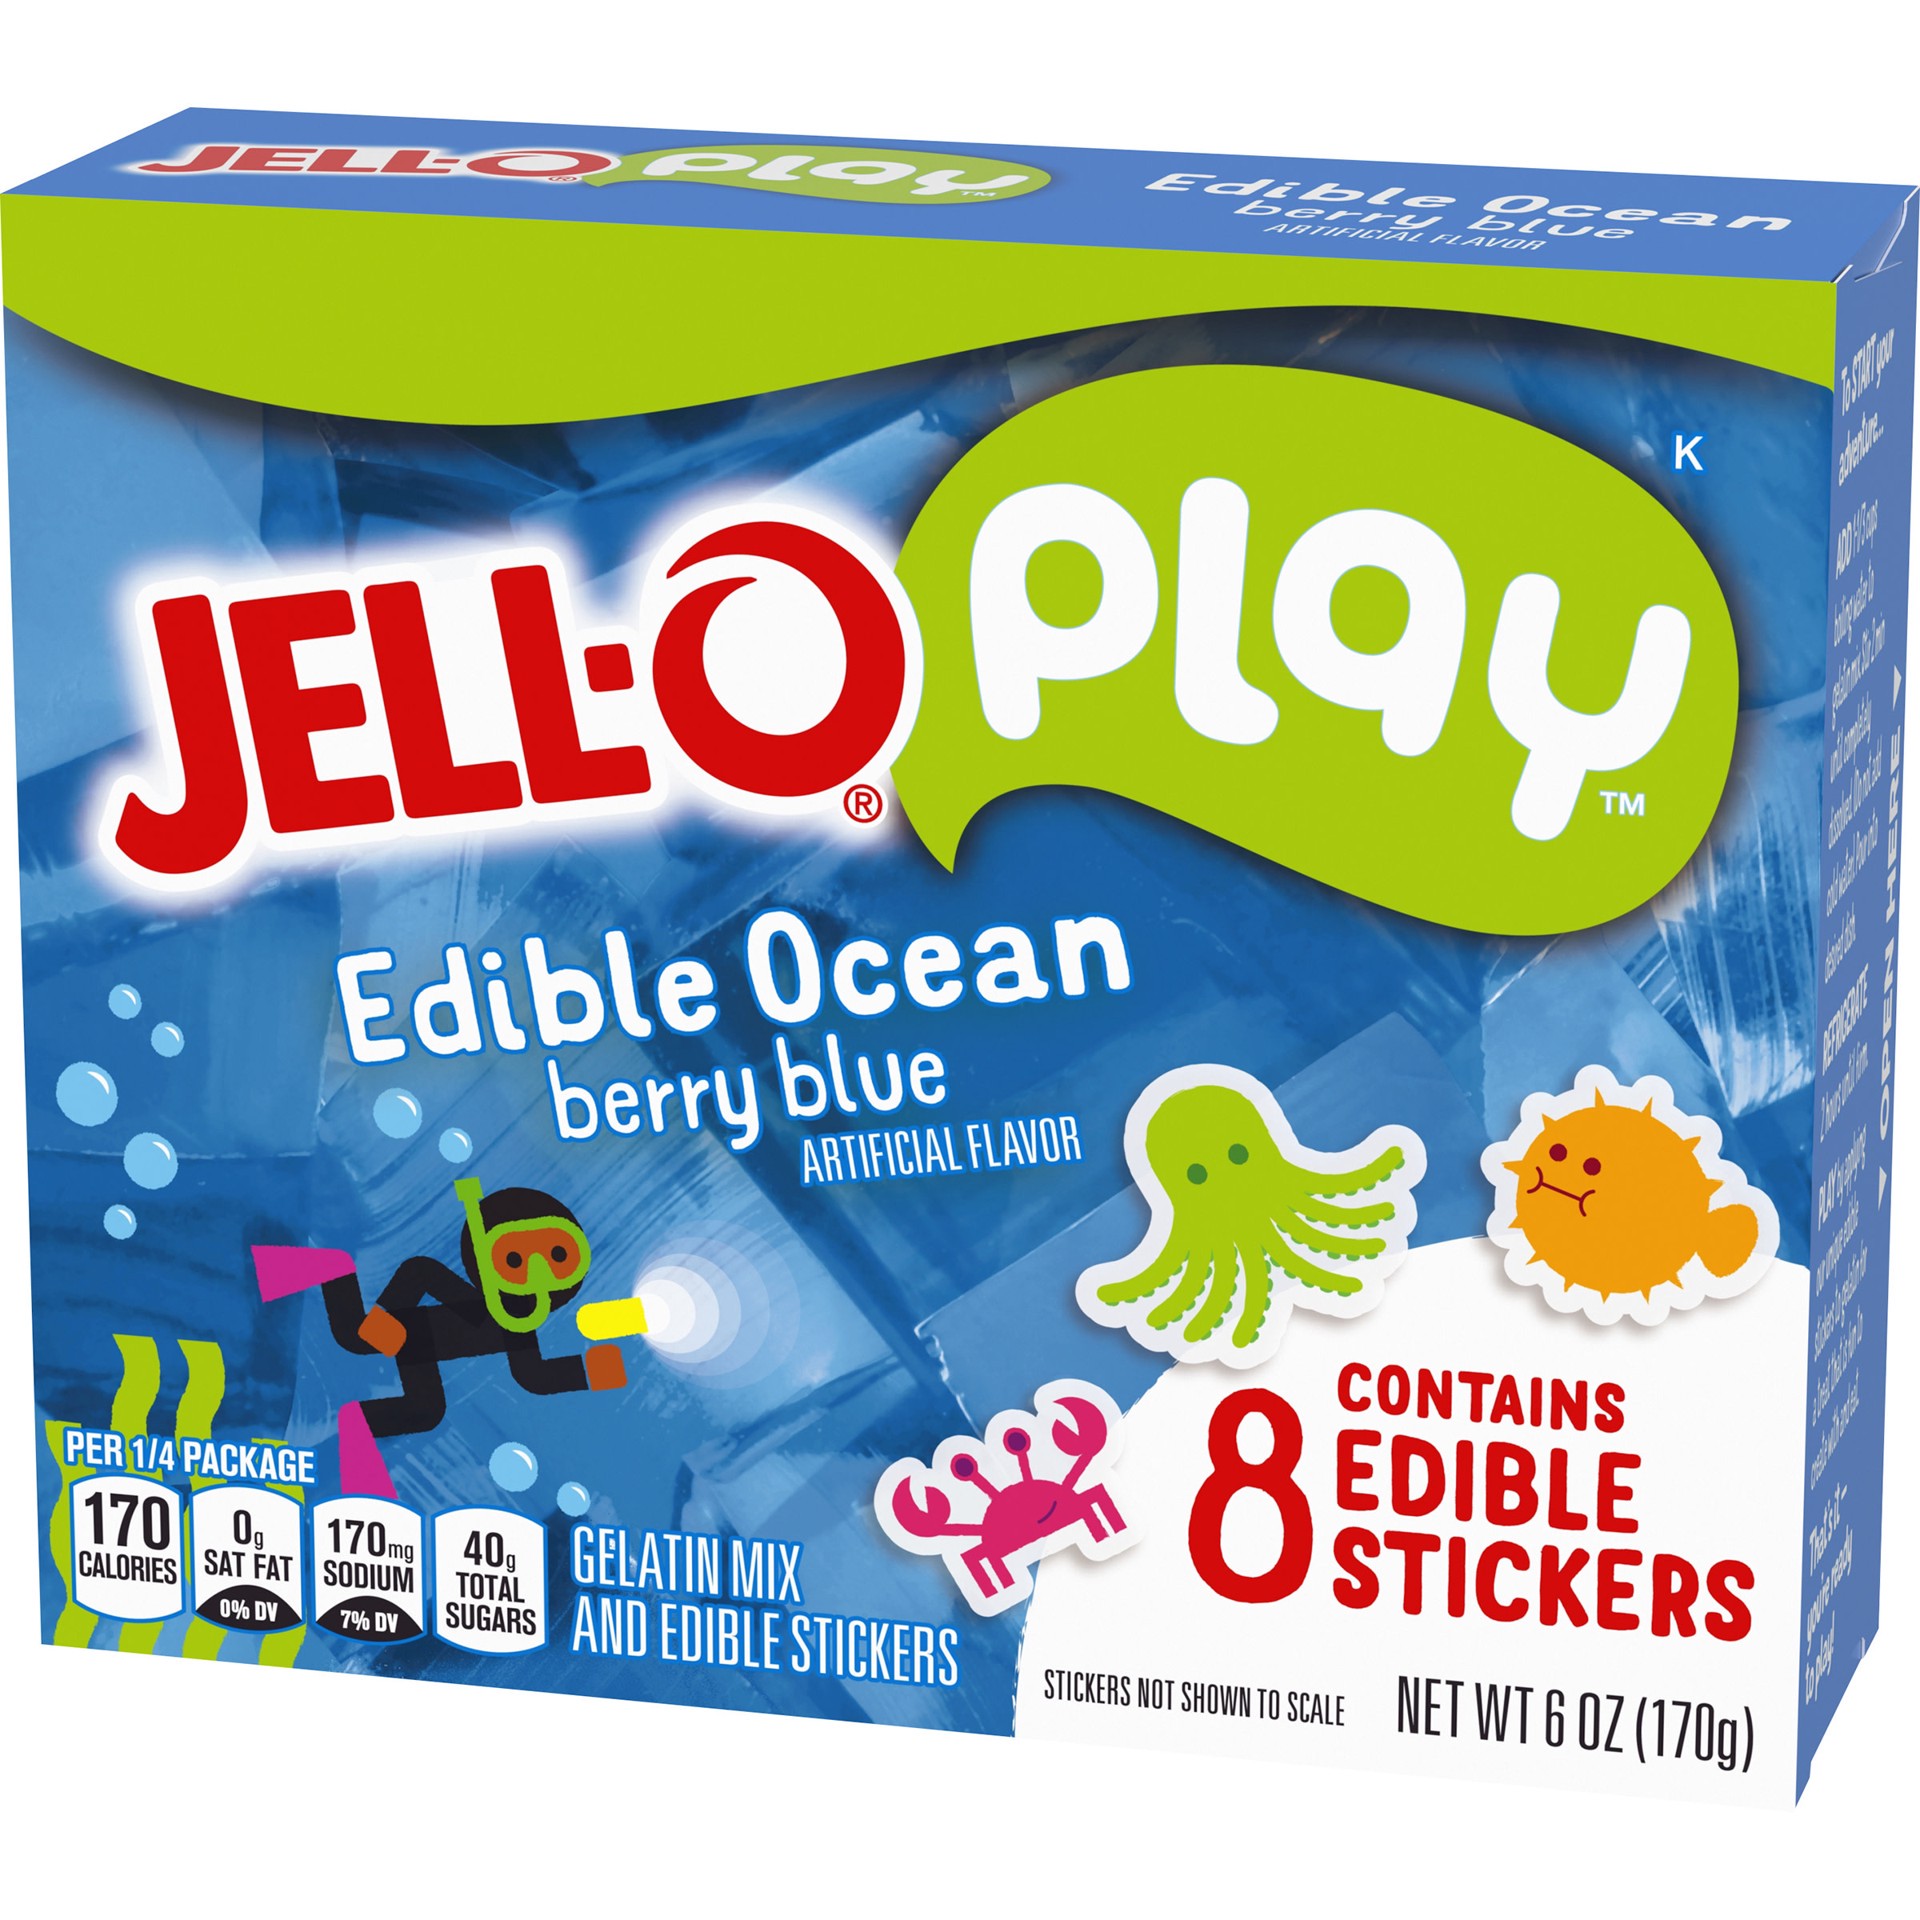 slide 2 of 10, Jell-O Play Edible Ocean Berry Blue Gelatin Mix & Edible Stickers Kit, 6 oz